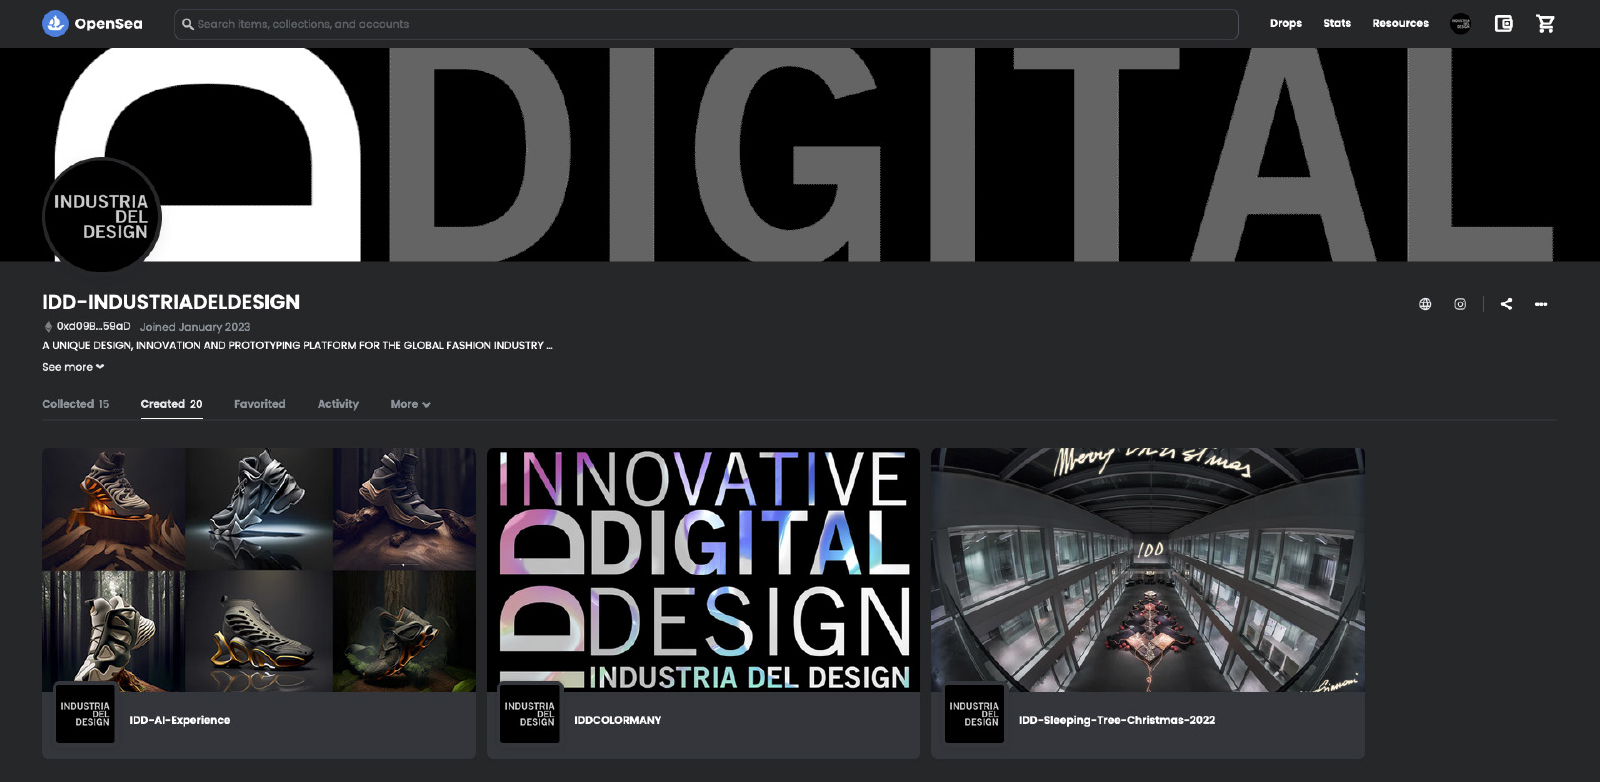 IDD-Industria-Del-Design-Opensea-NFT-00